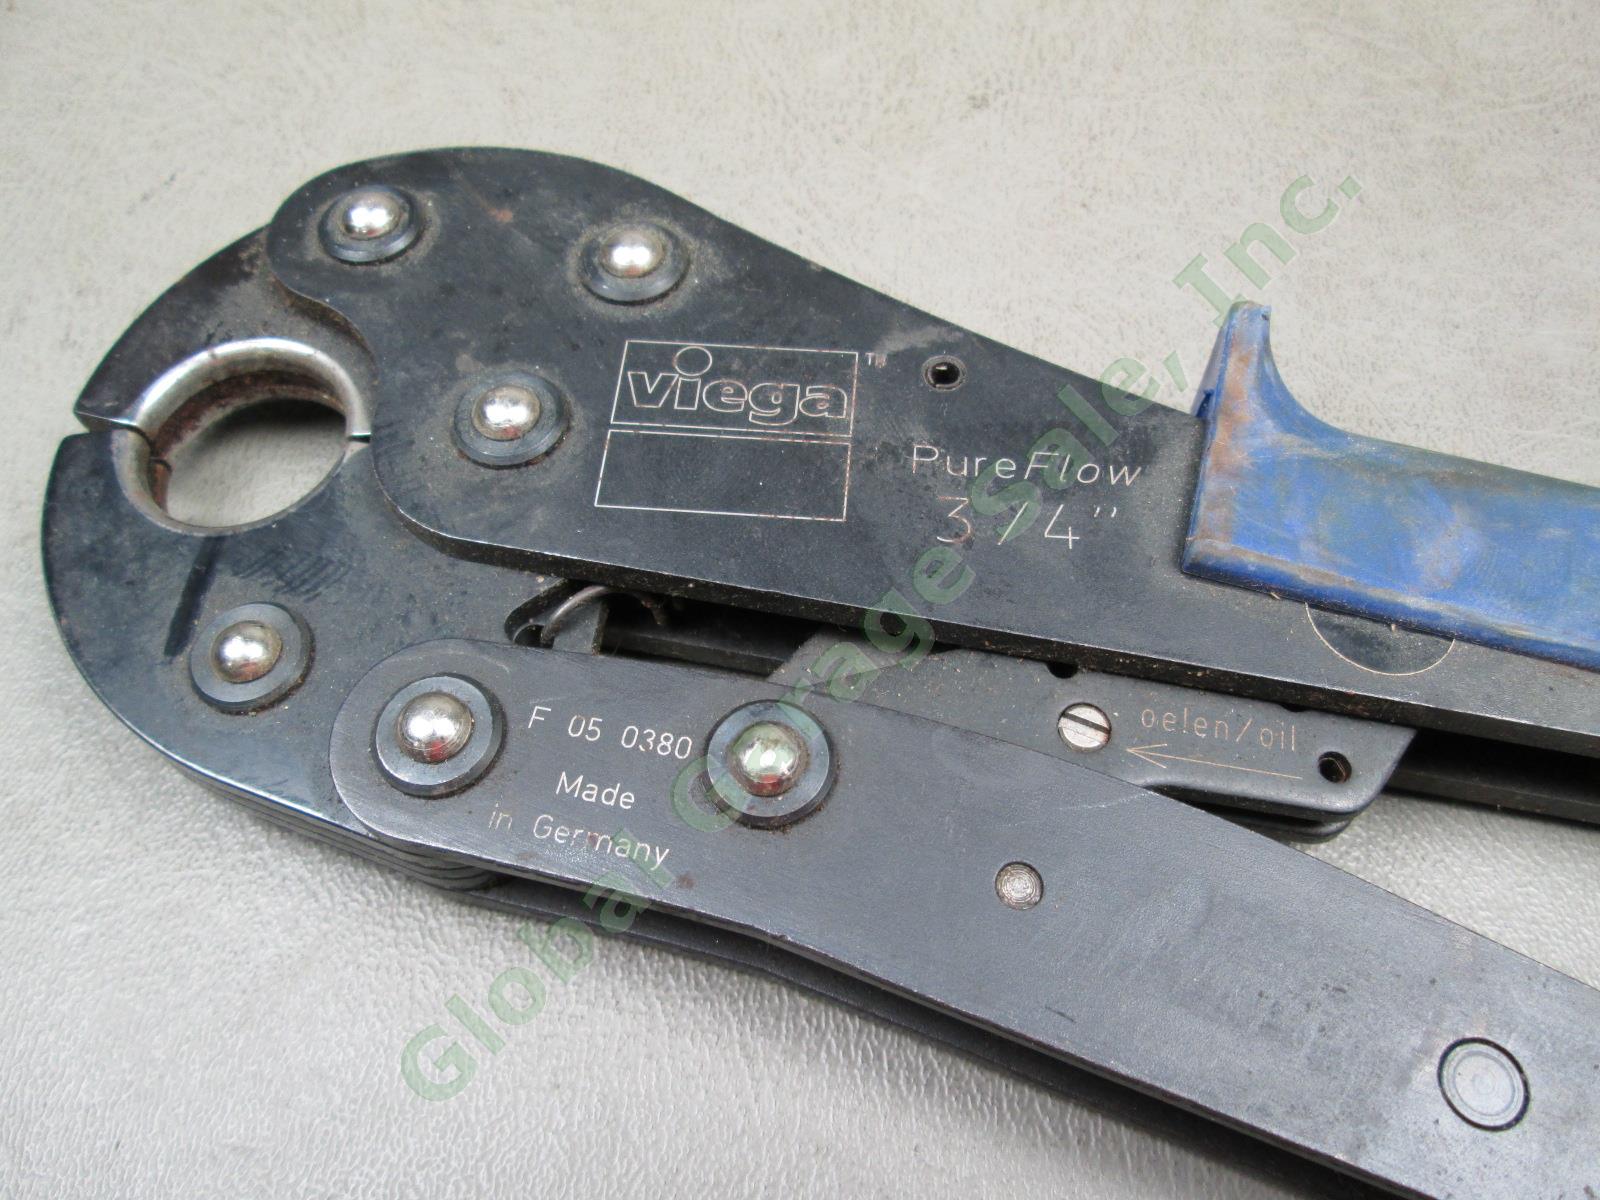 Viega PureFlow 3/4" PEX Press Tool Ratcheting Plumbing Crimper Blue Handle 50040 4